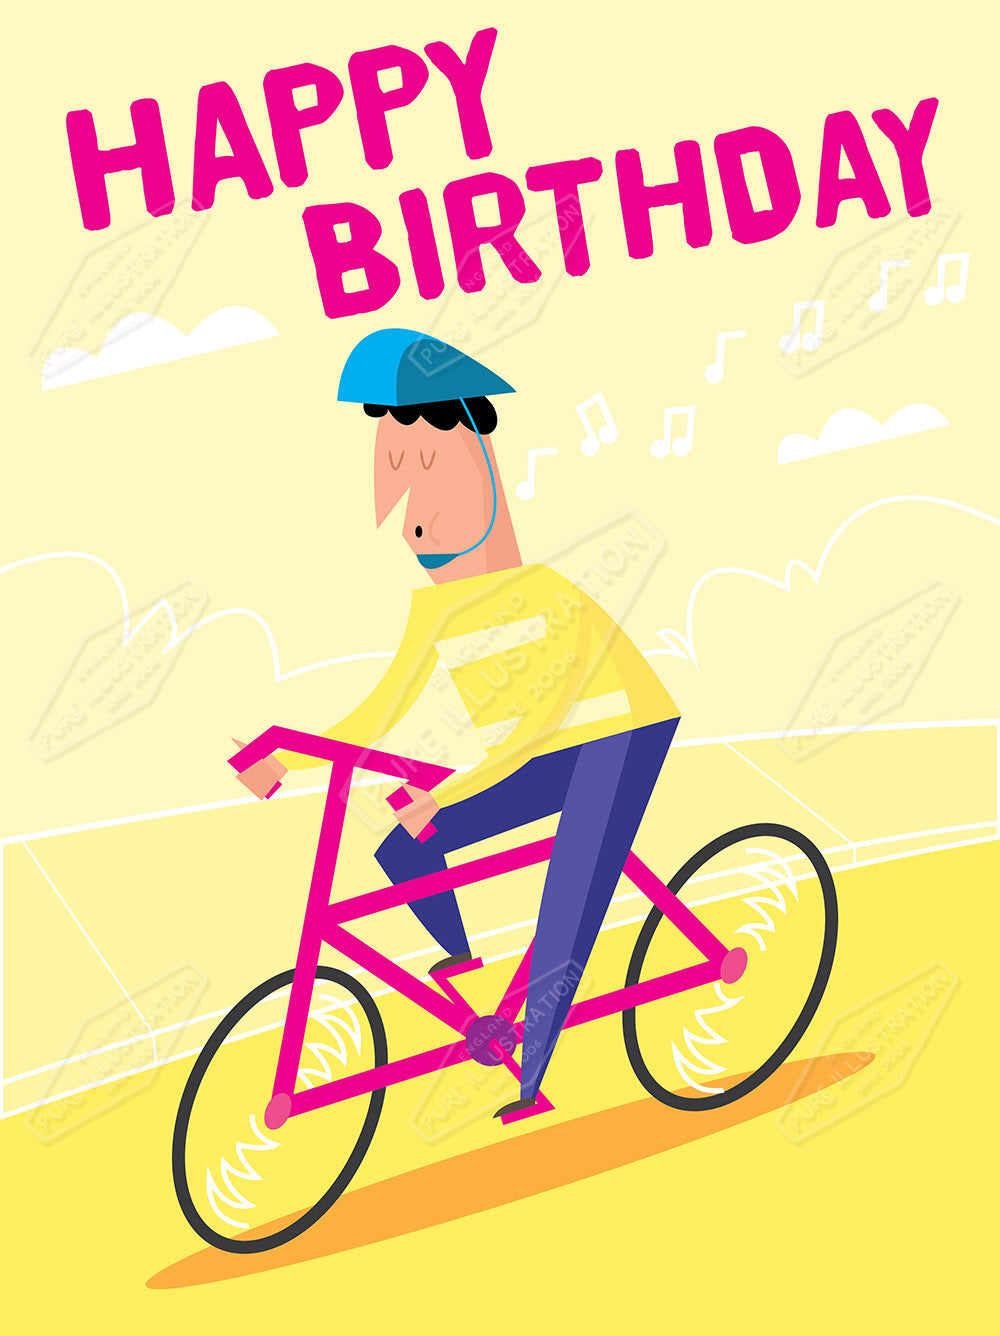 00032679RSW - Luke Swinney is represented by Pure Art Licensing Agency - Birthday Greeting Card Design